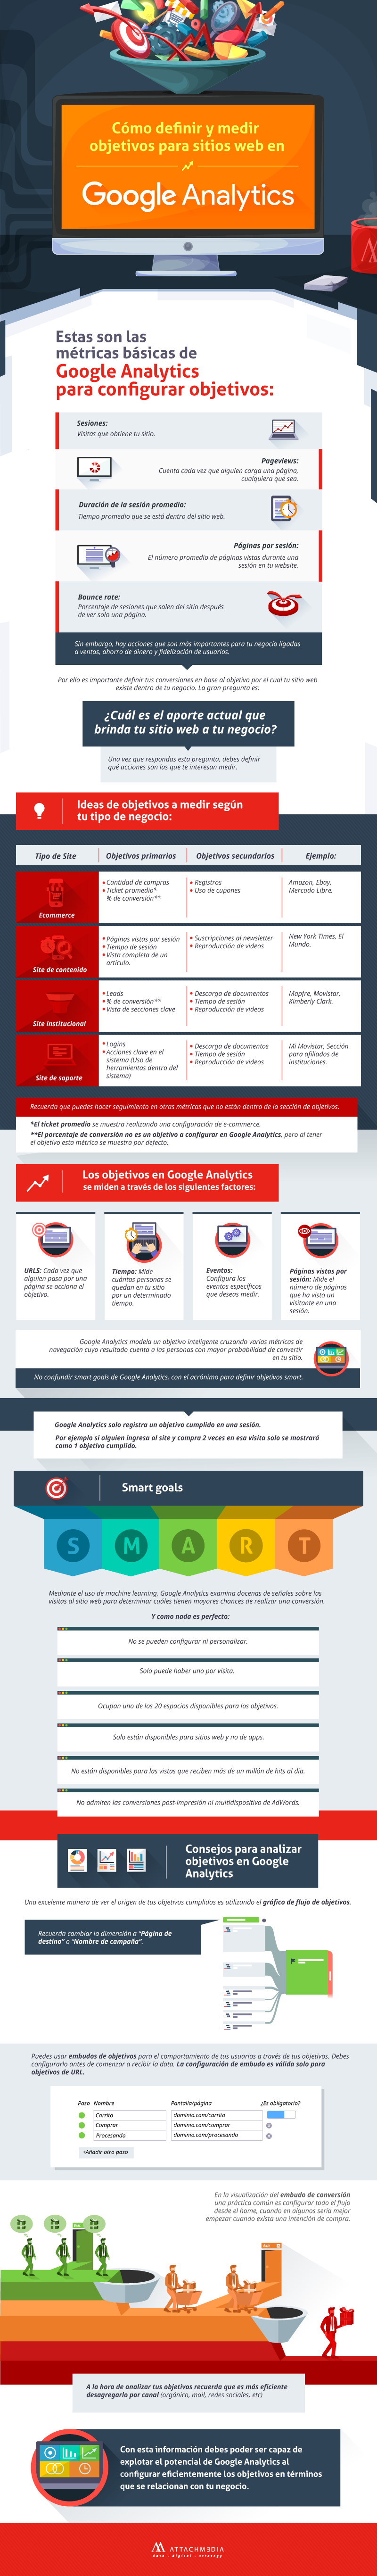 infografia-google-analytics-web